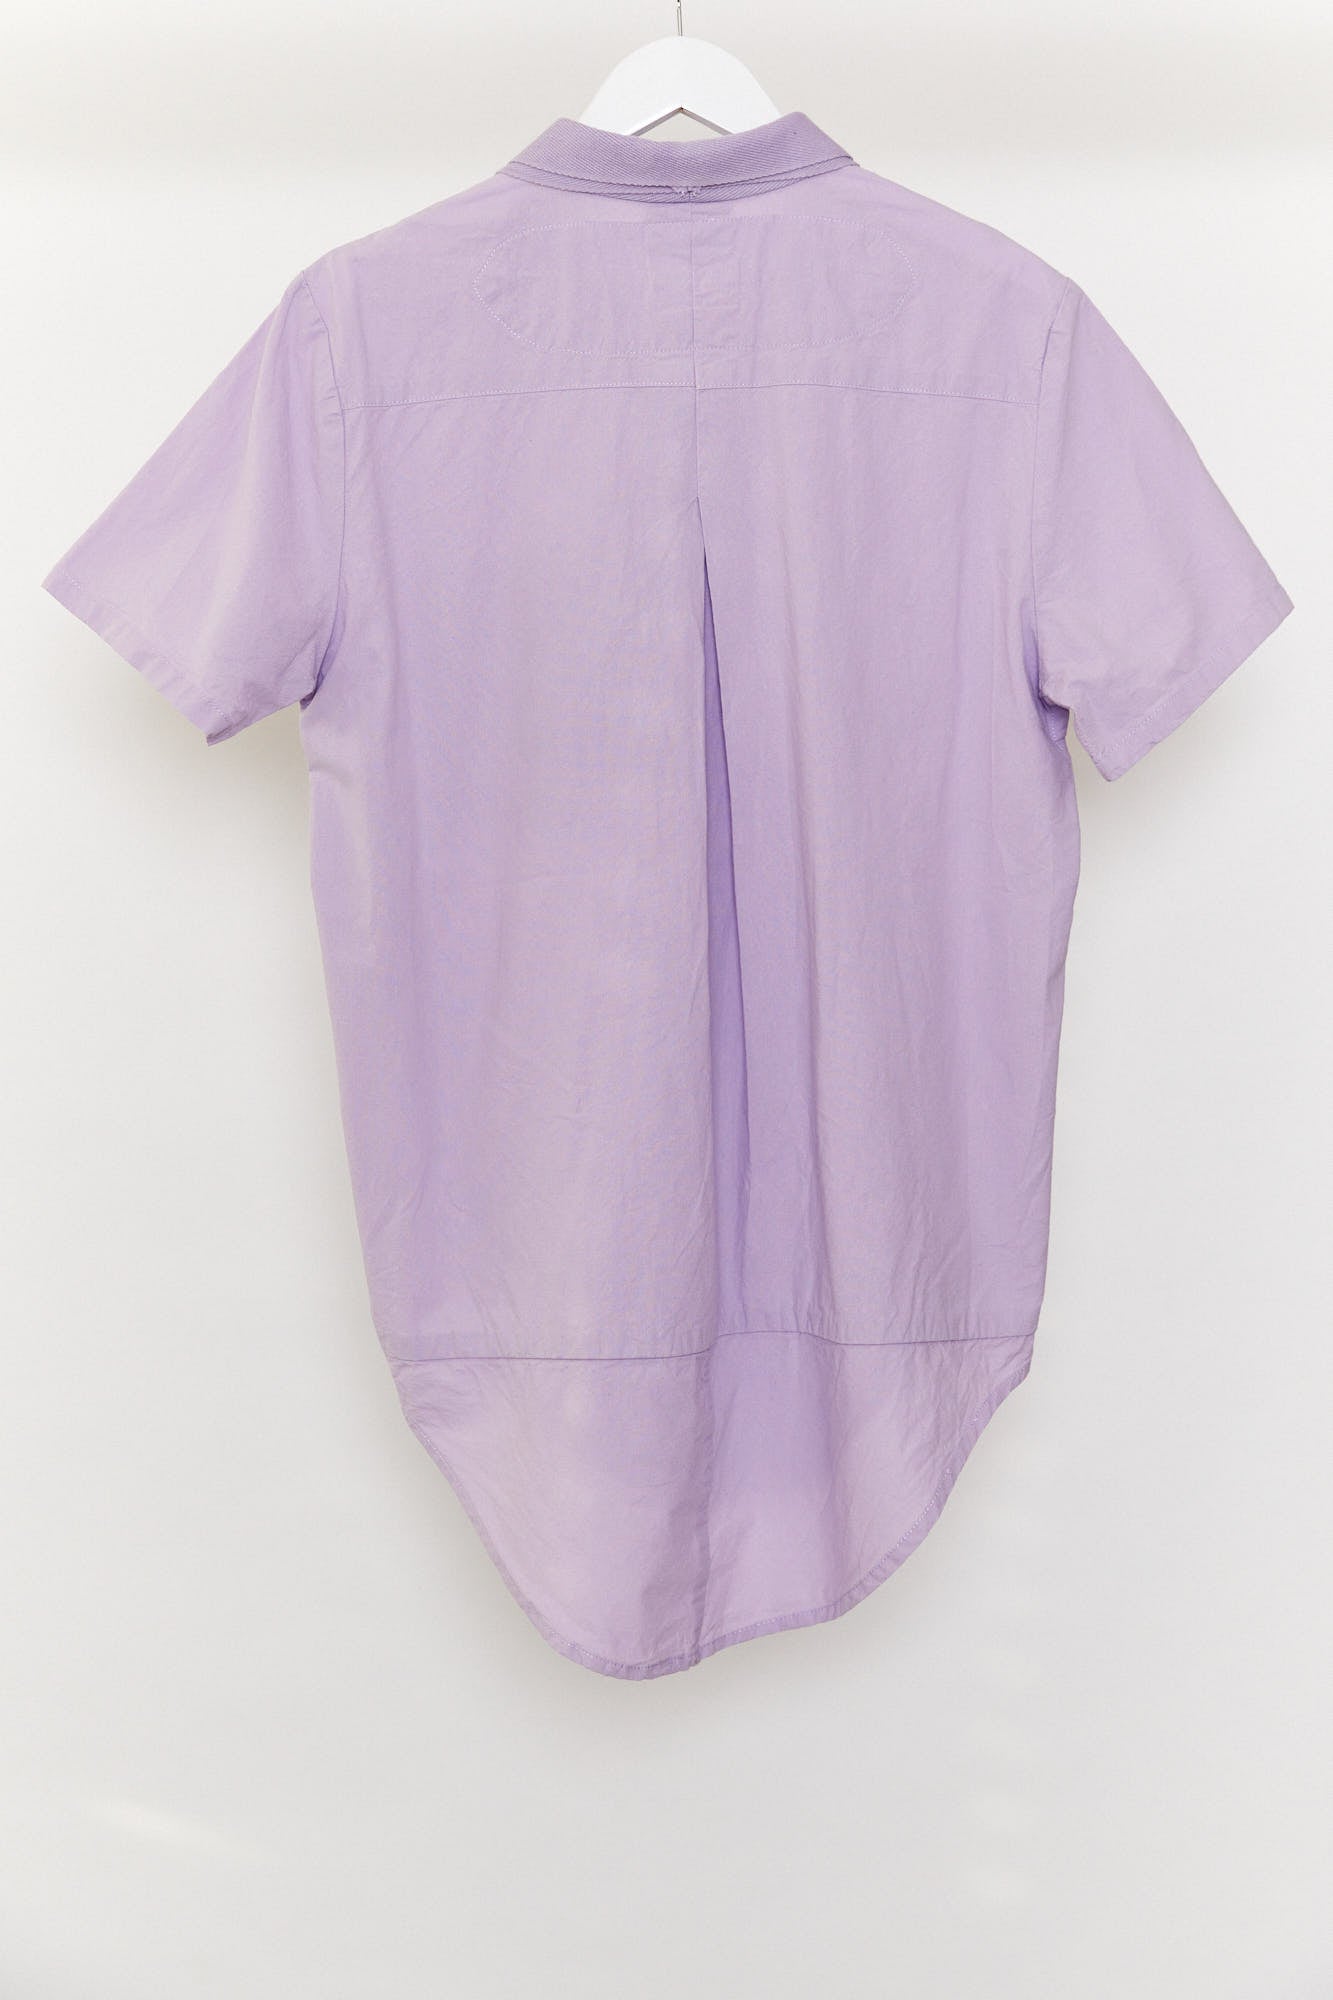 Mens purple ASOS short sleeve shirt size Large